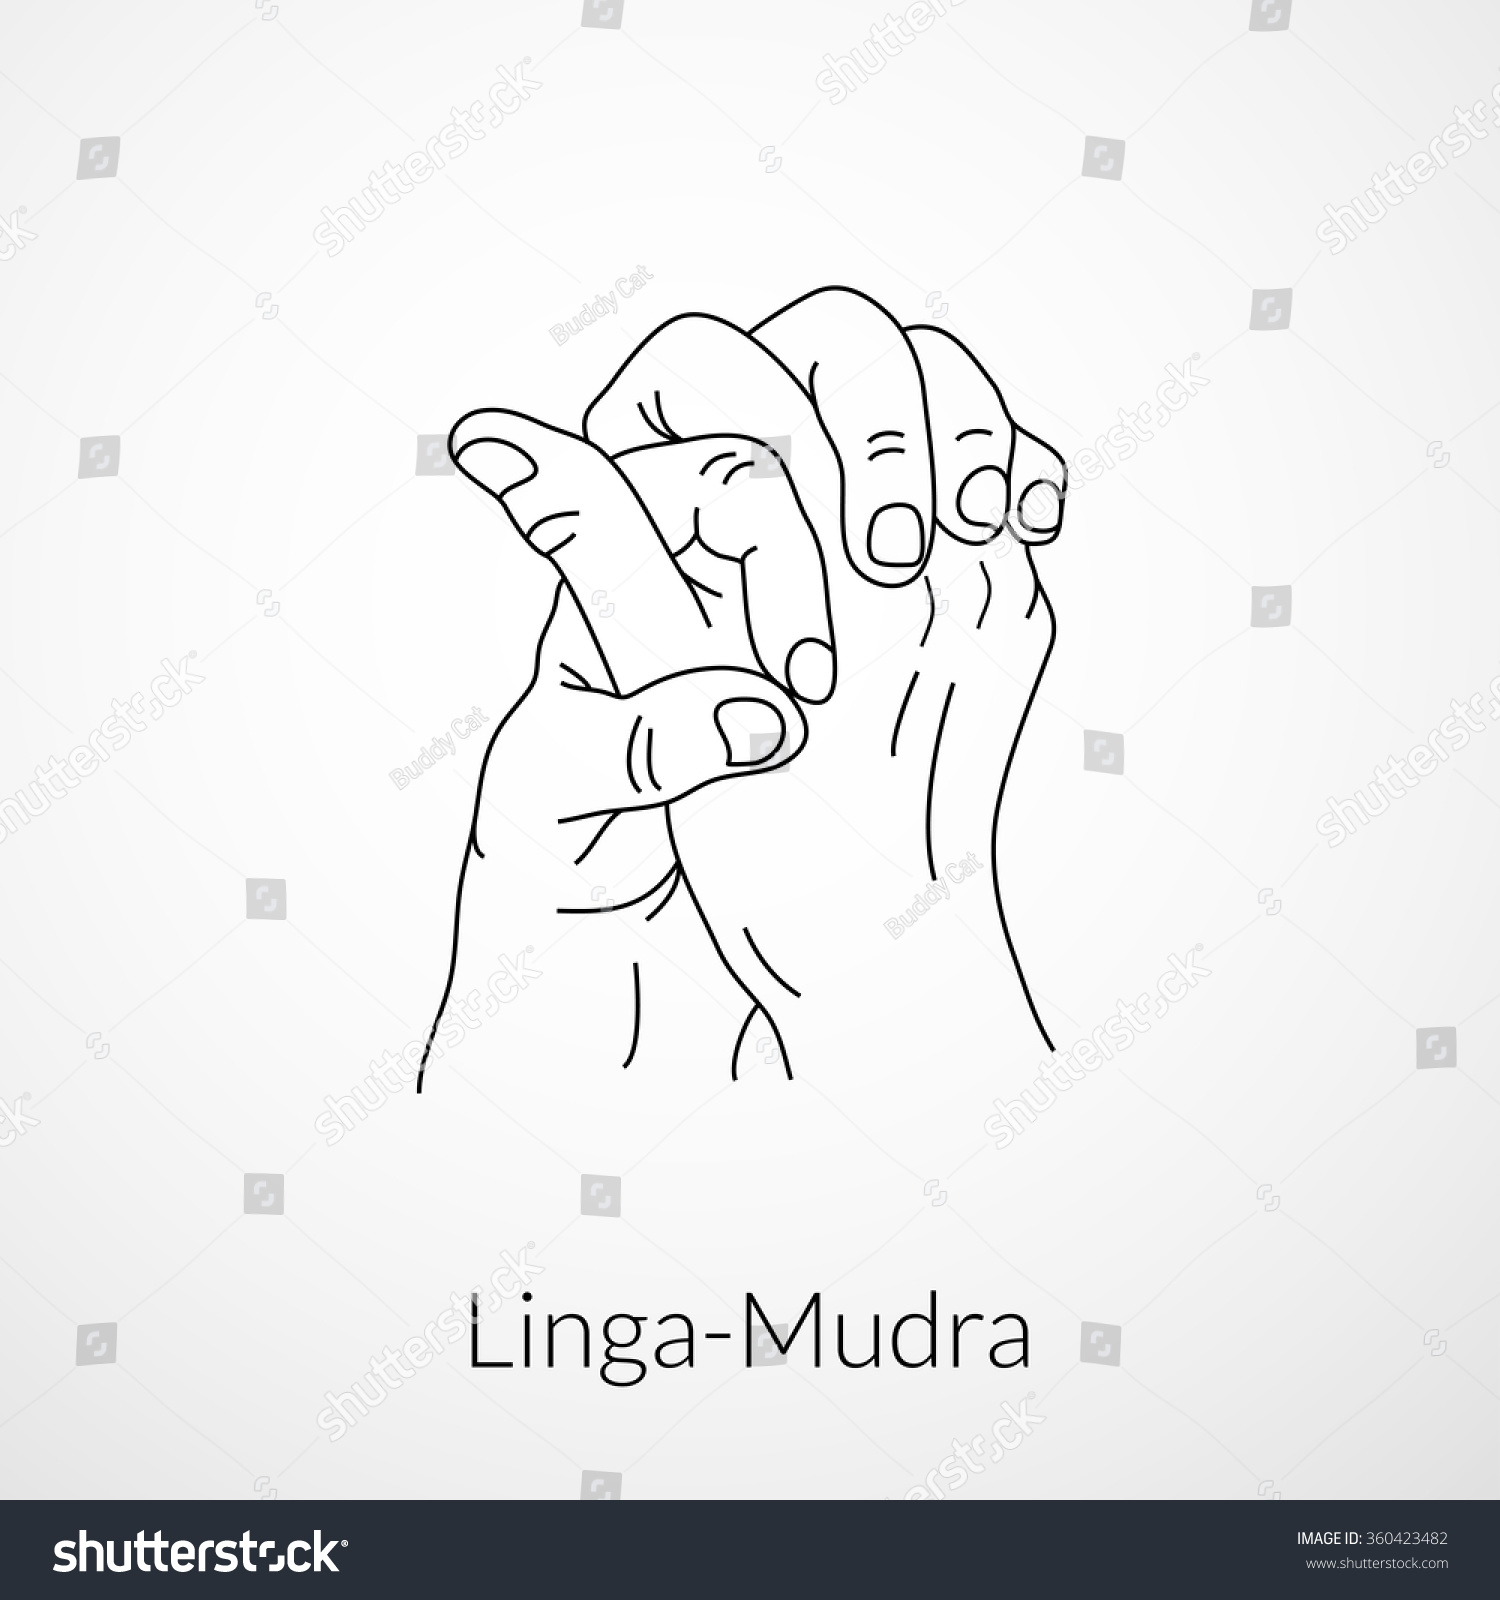 Hand Yoga Mudra Lingamudra Vector Illustration Stock Vector (Royalty ...